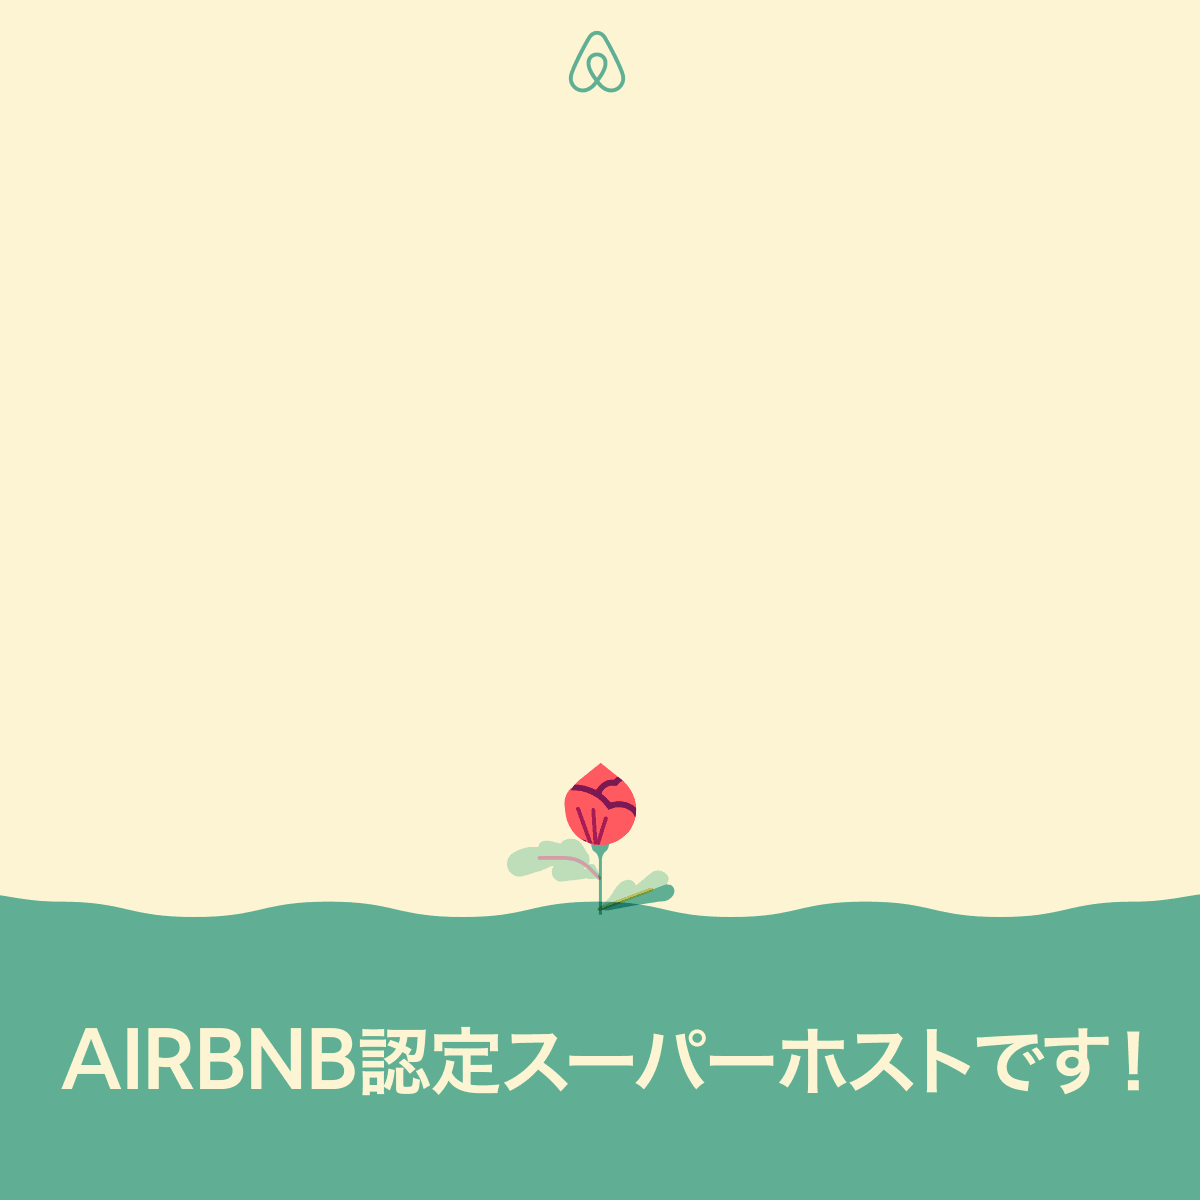 AirBnb Super Host